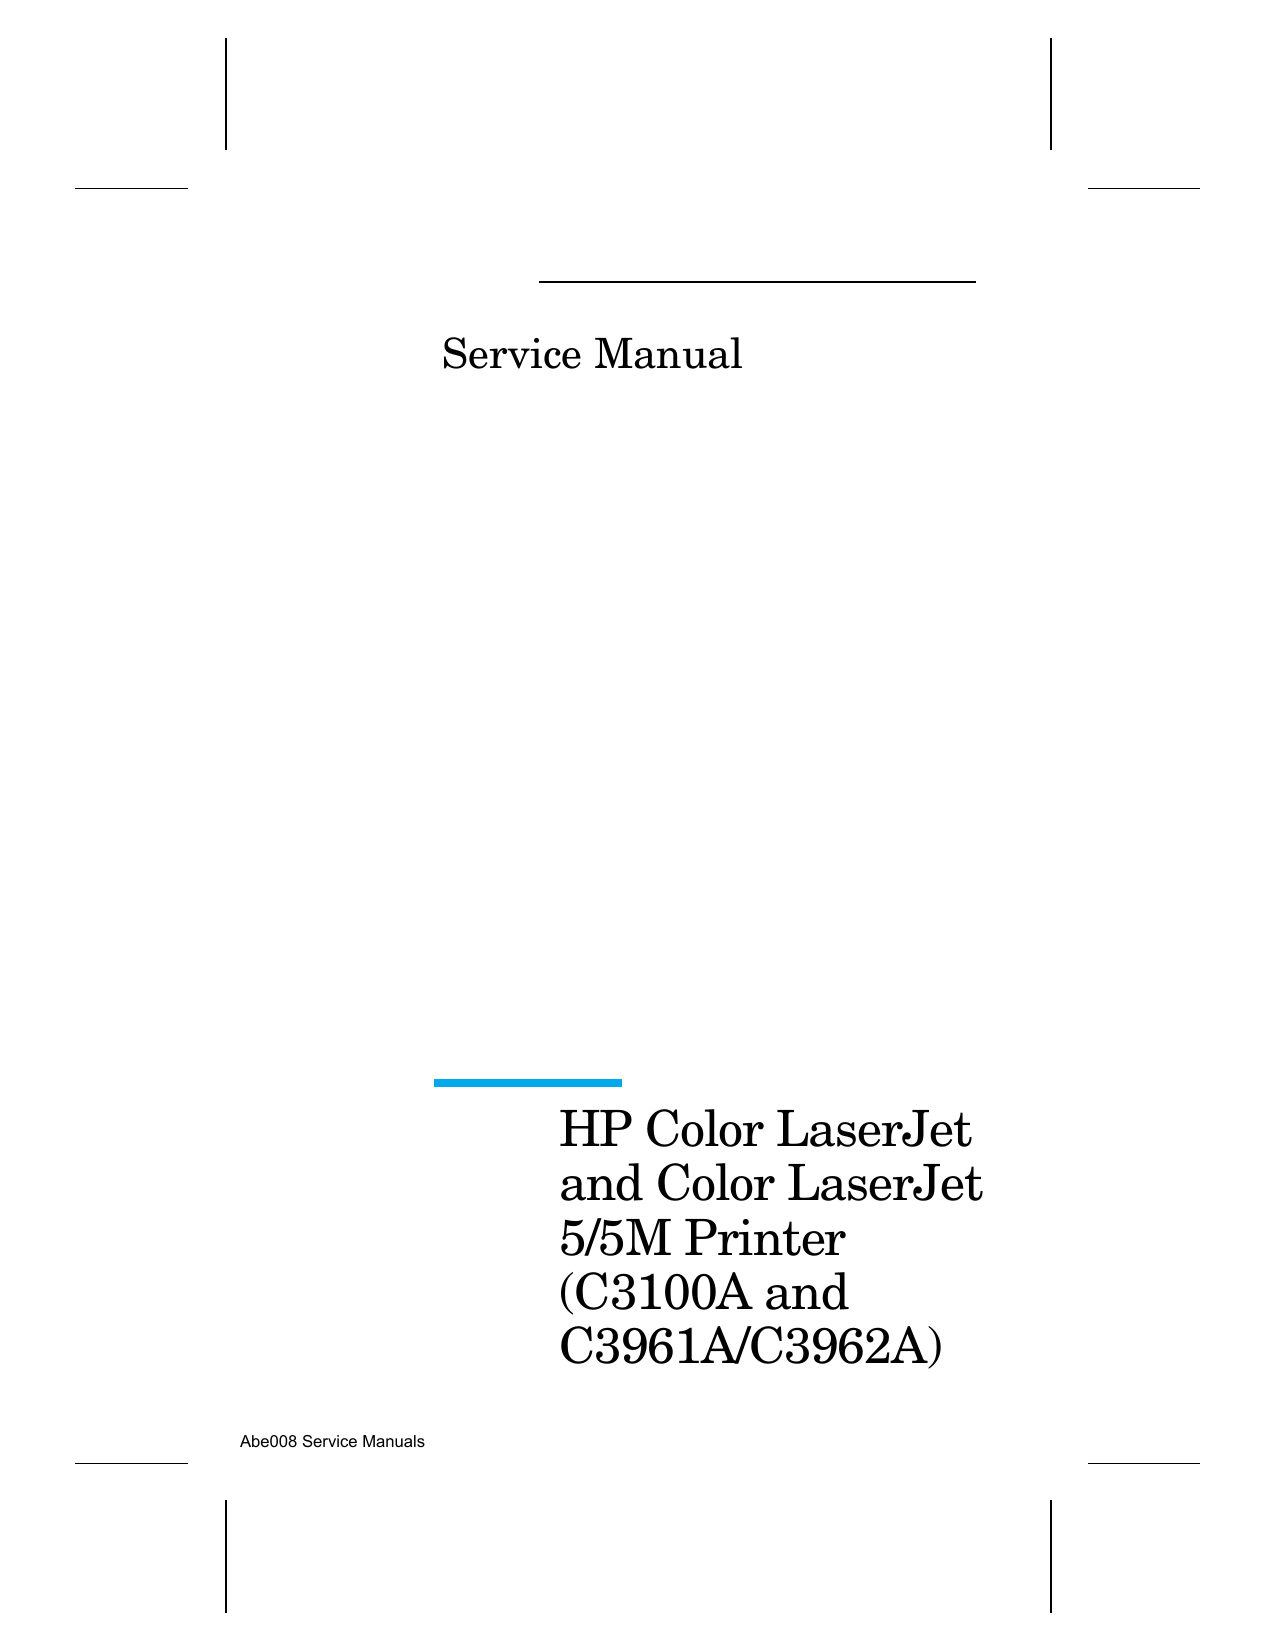 HP Laserjet 5, 5M, CA 3100A, C3961A & C3962A laser printer service guide Preview image 1